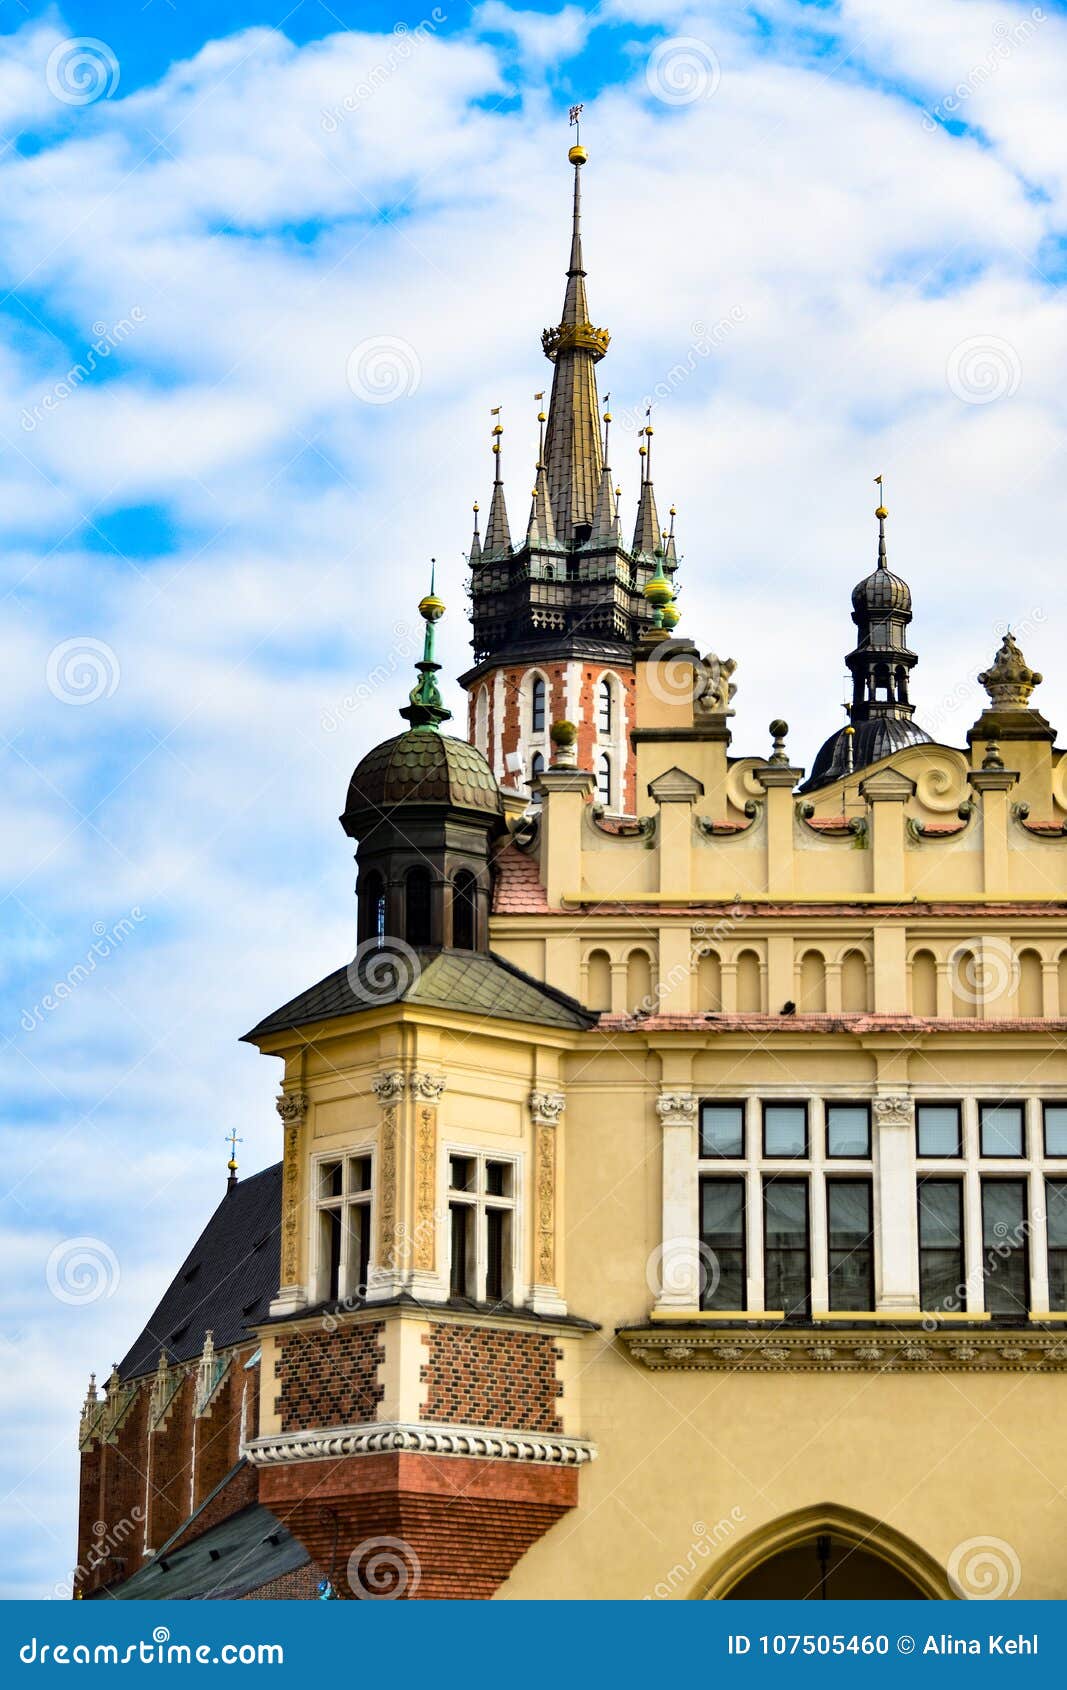 architecture of krakow, poland, bazylika mariacka